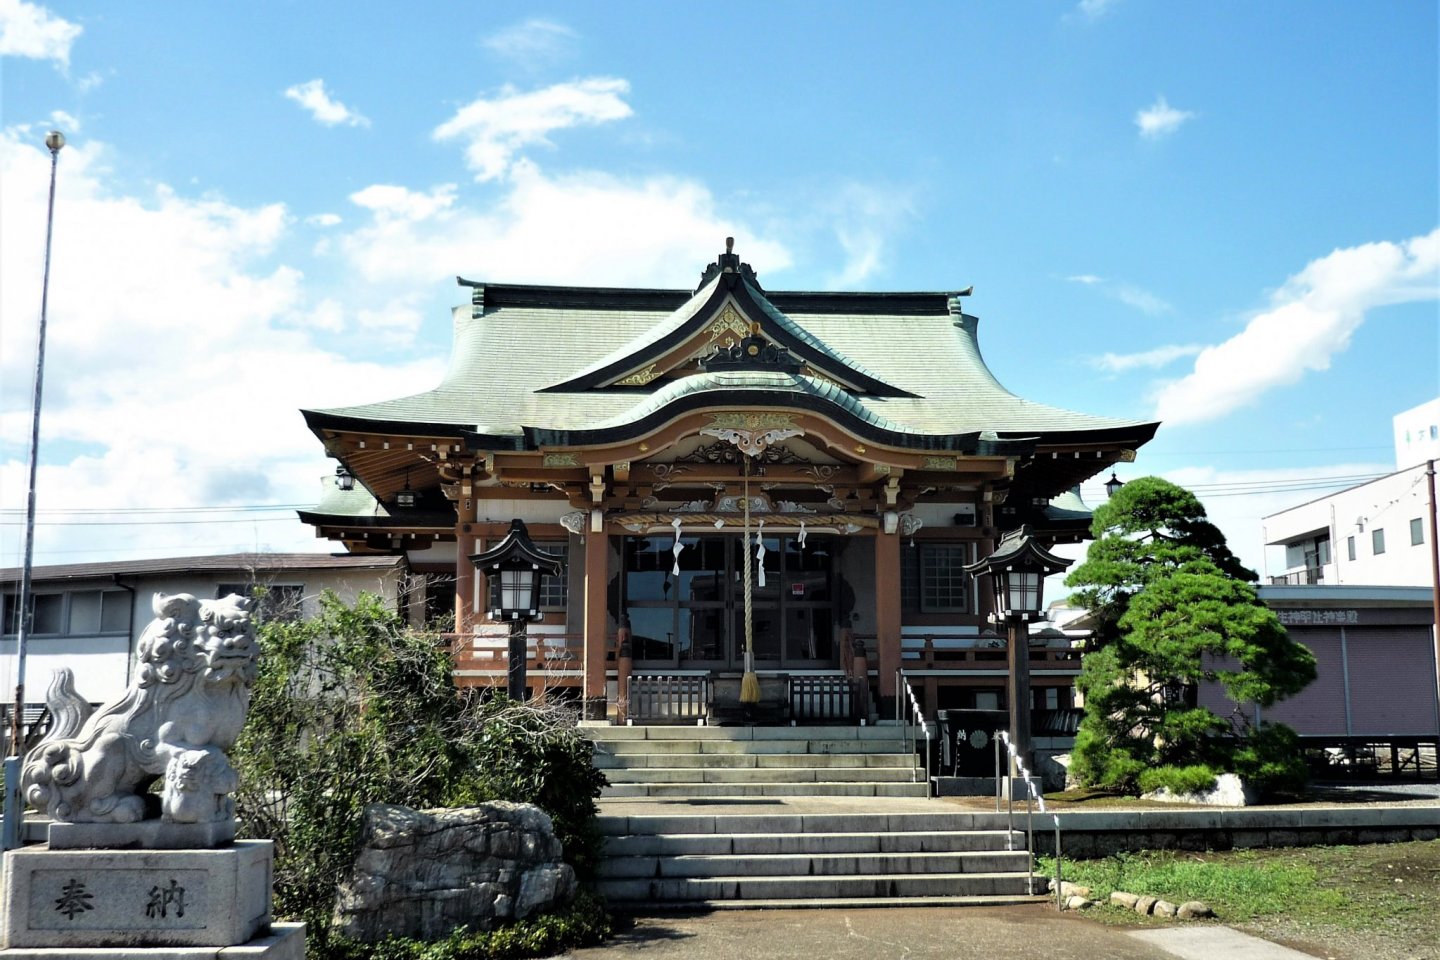 Fussa Shinmei Shrine (brightness adjusted)